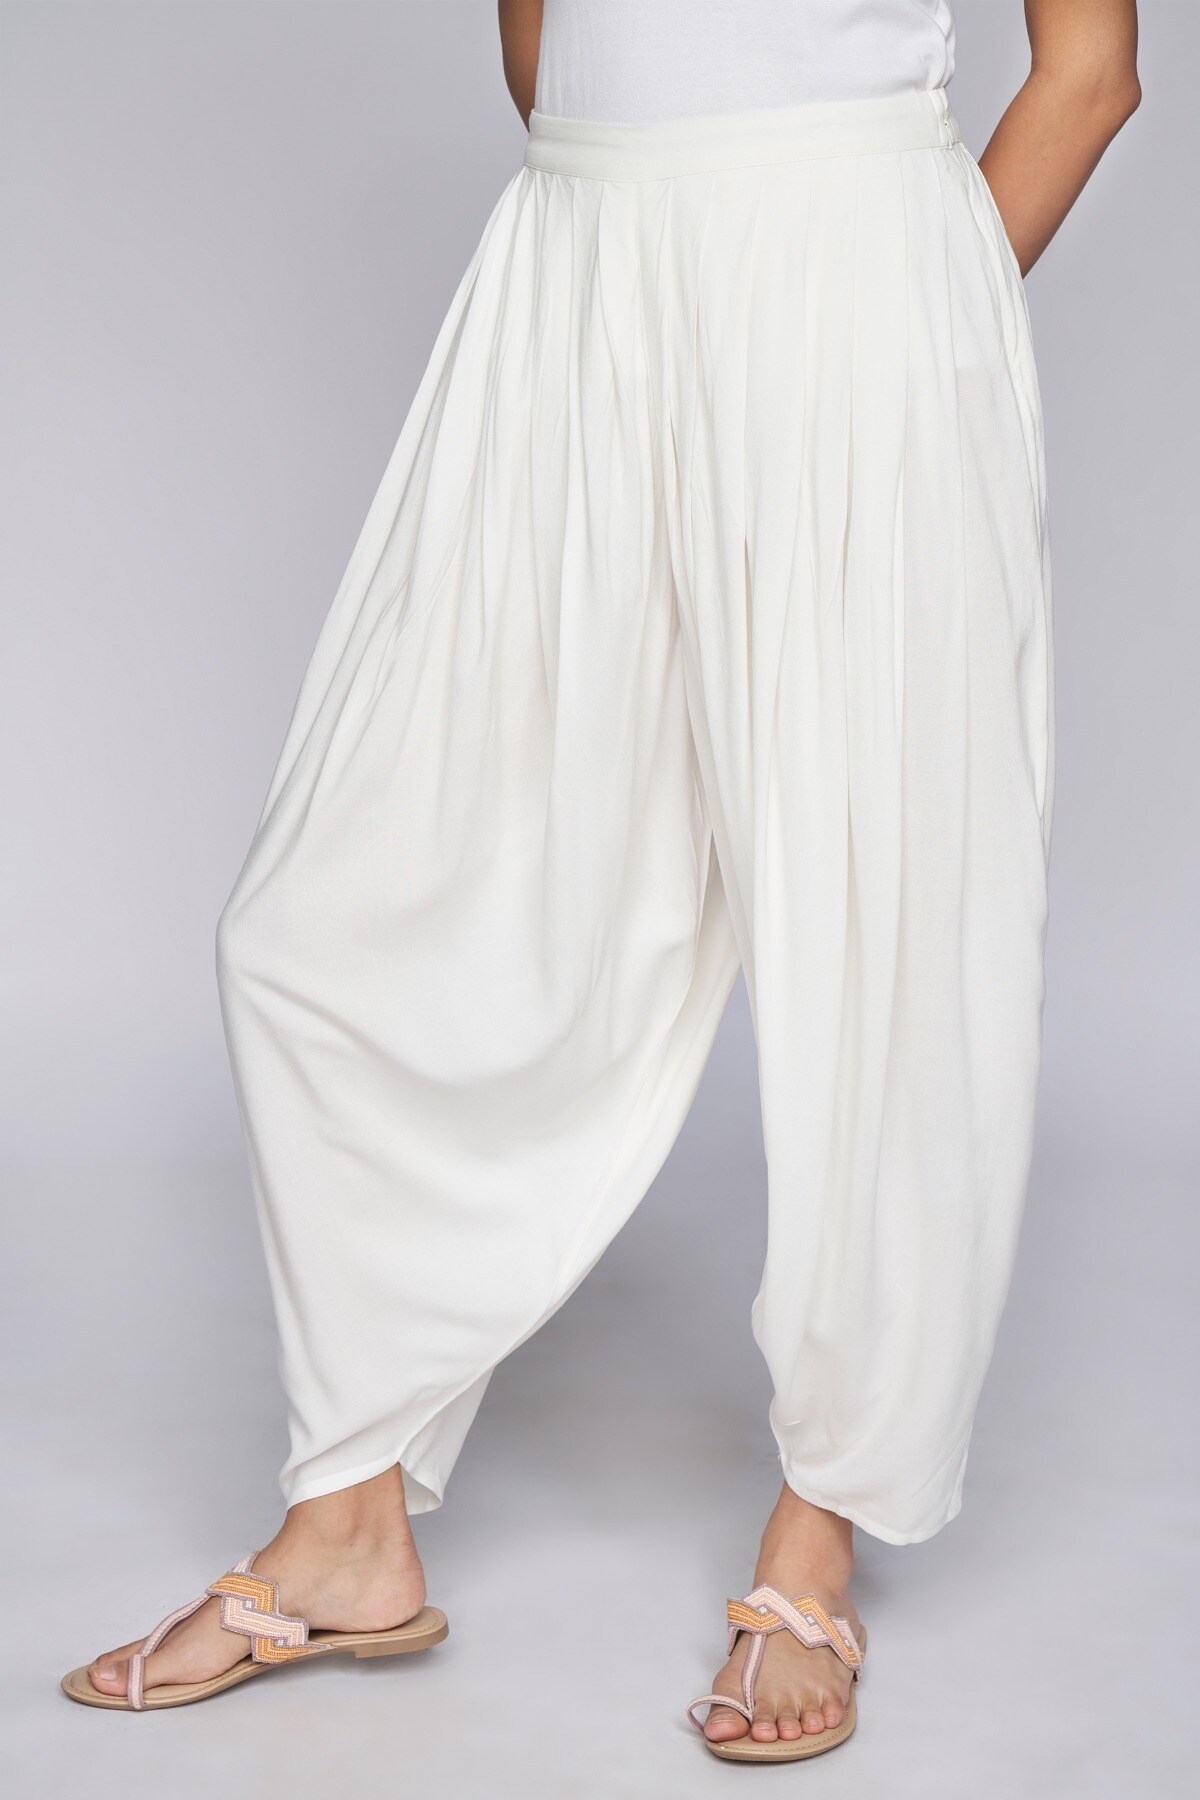 Buy White Lace Cotton Pants  ROZGWHKE01ROZ4  The loom